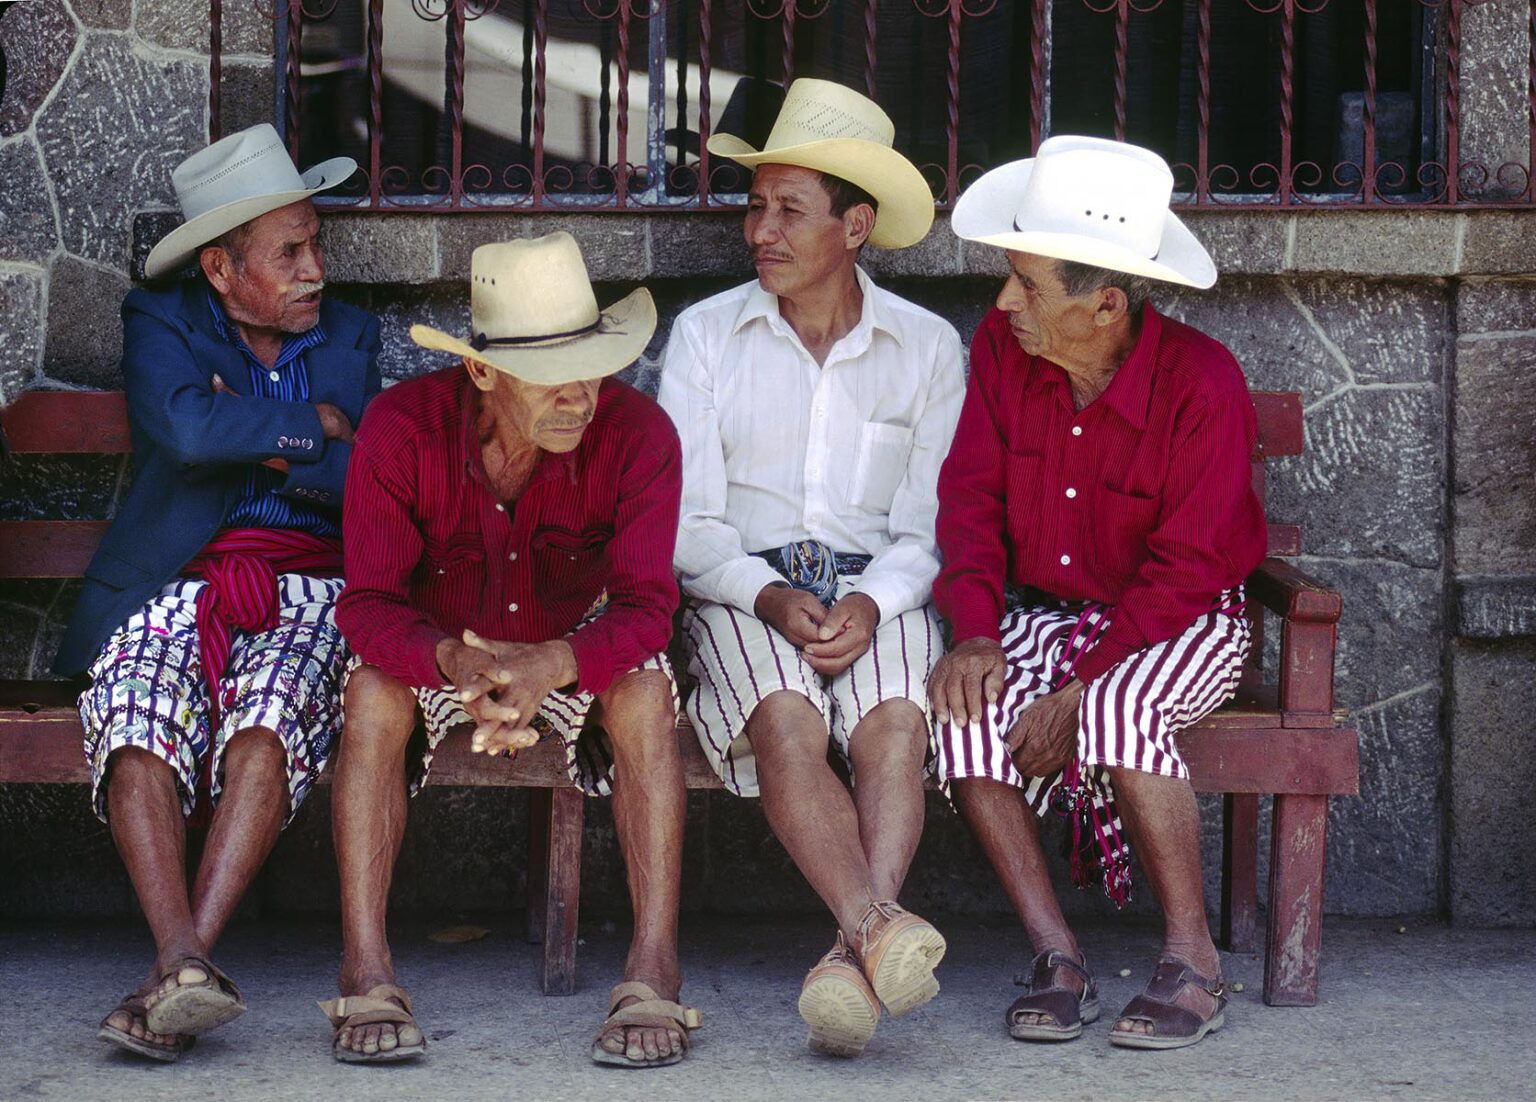 TZUTUJIL MEN in traditional dress with COWBOY HATS - SANTIAGO ATITLAN, GUATEMALA